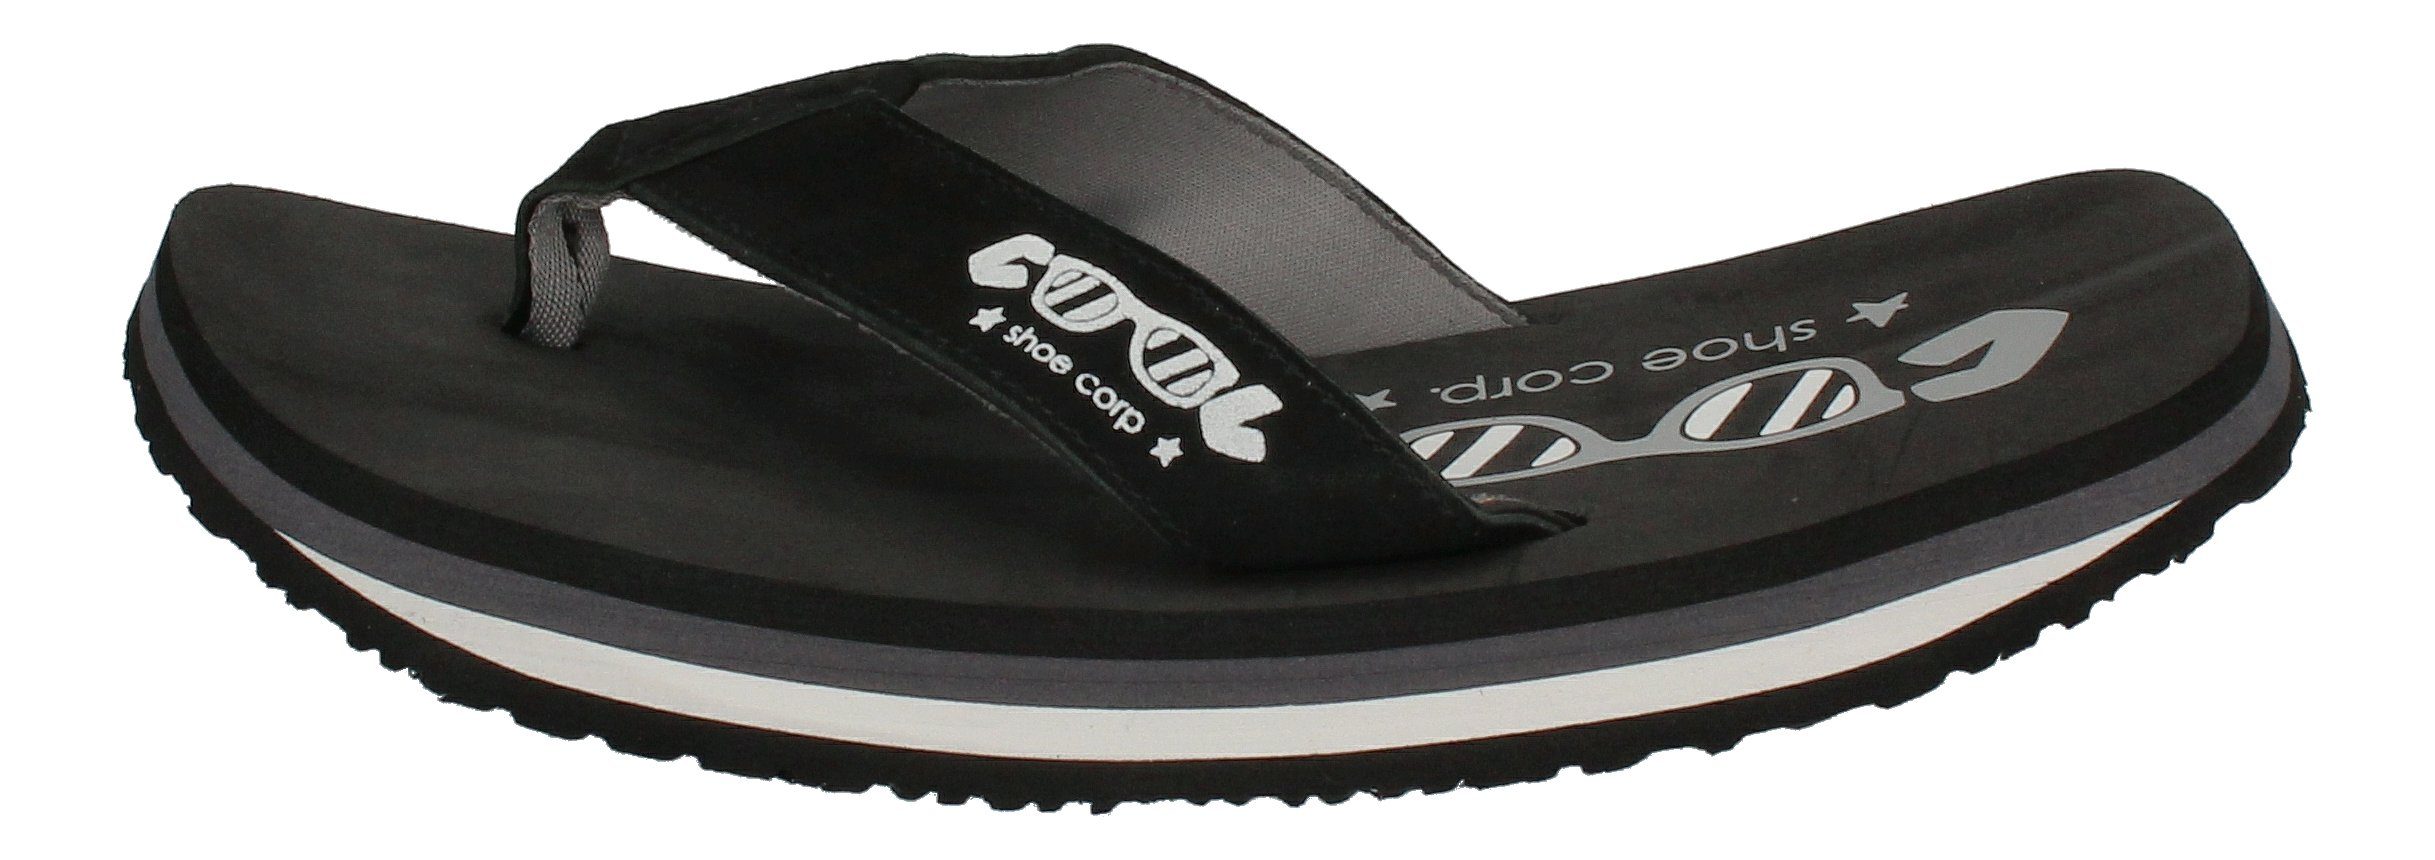 Schuhe Zehentrenner Cool Shoe Original Zehentrenner Black 2